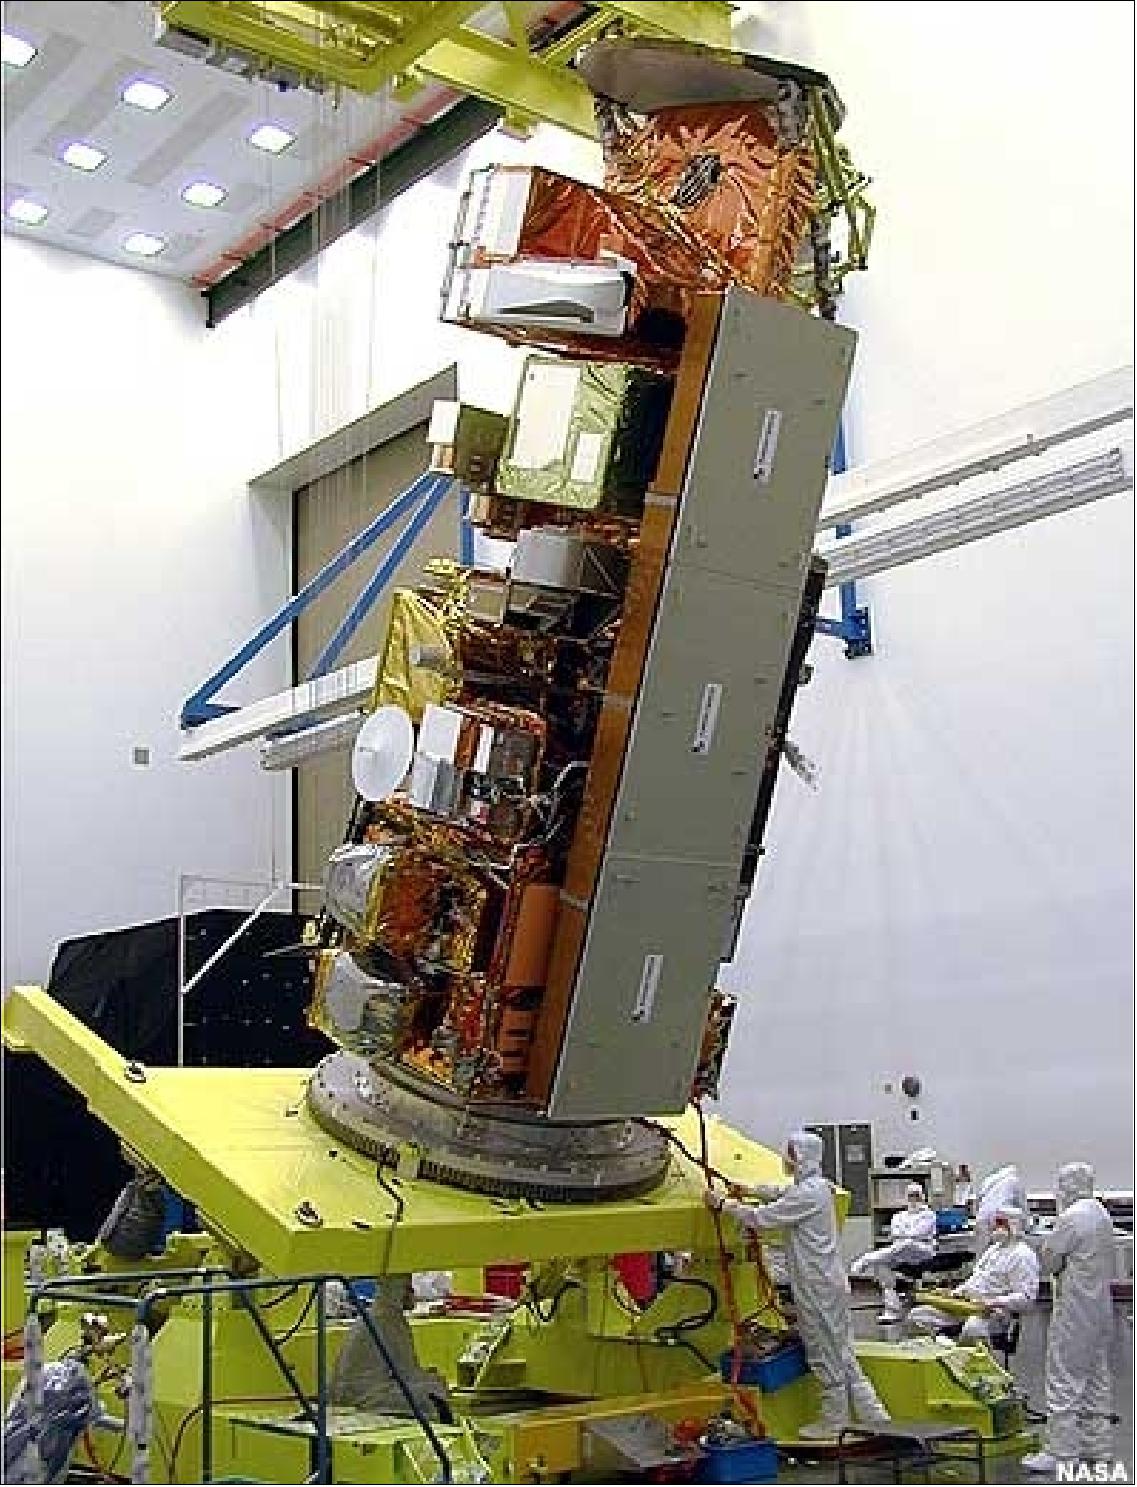 Figure 2: The Aqua spacecraft in launch preparation at VAFB (image credit: NASA)